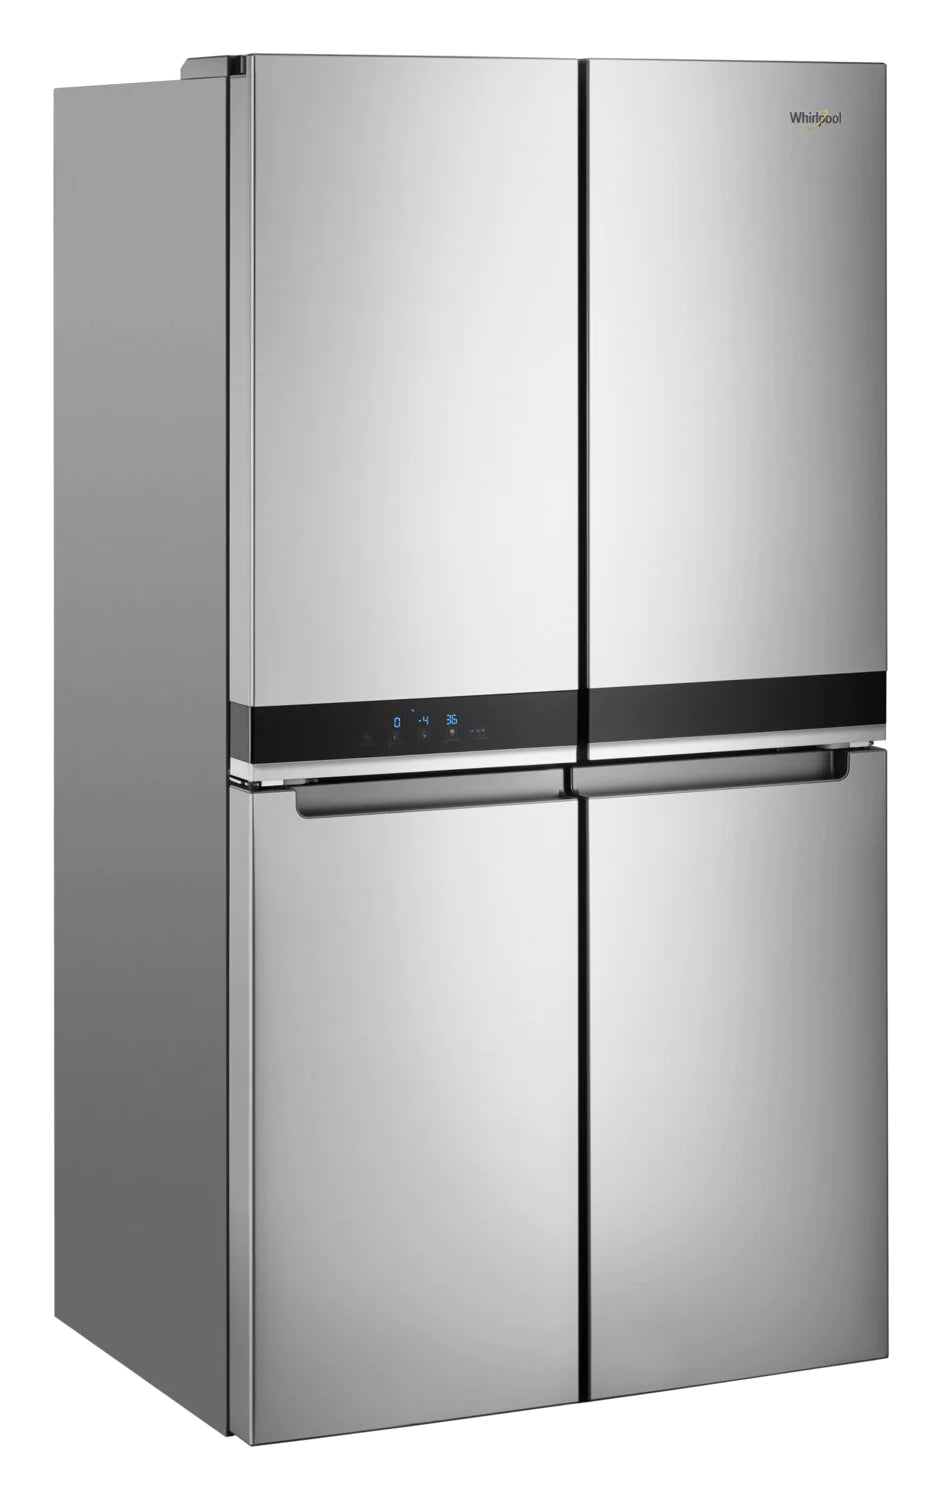 Whirlpool Refrigerator 36" Metallic Steel WRQA59CNKZ